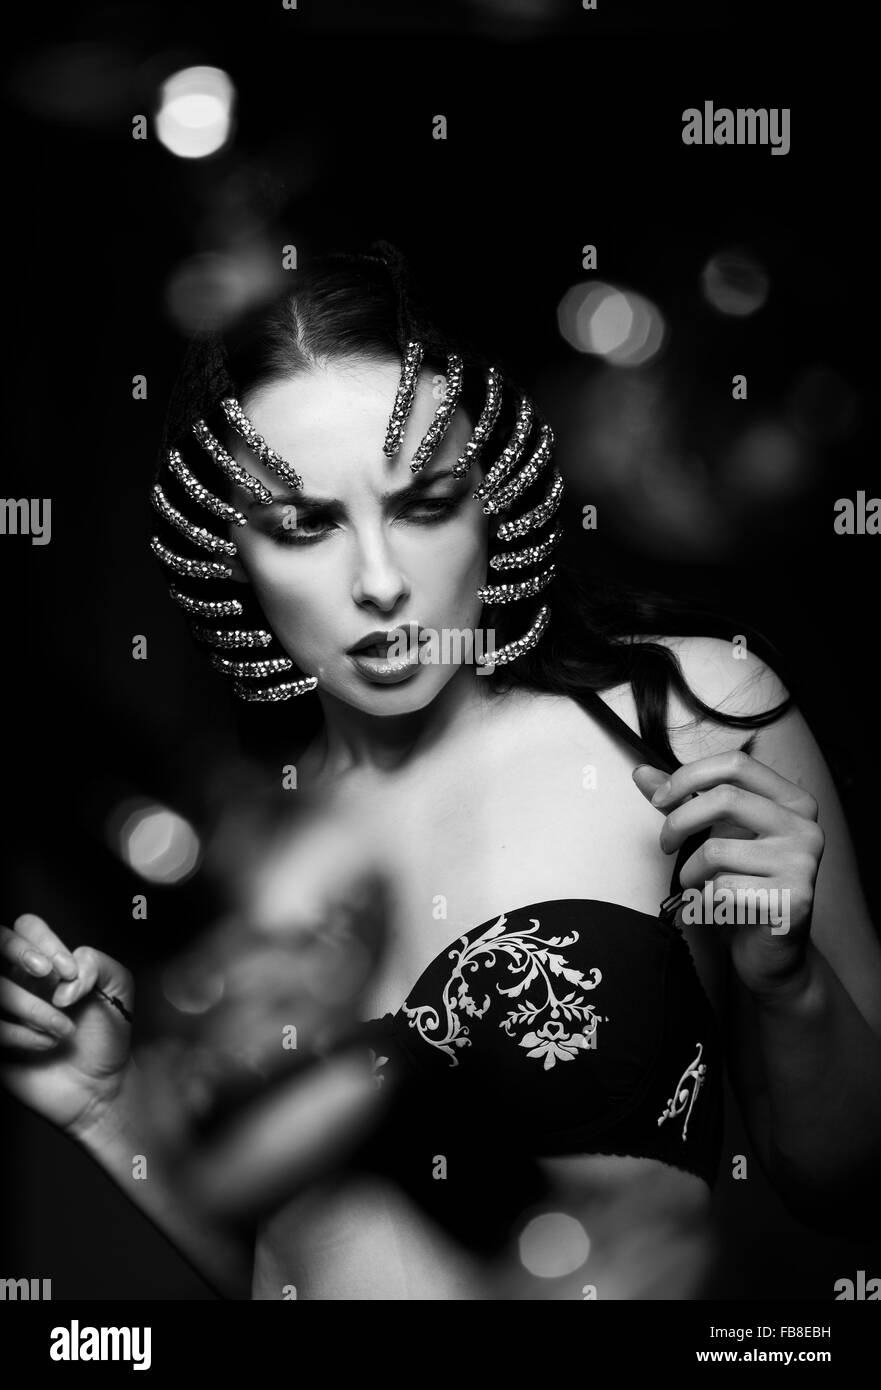 Black and white studio fashion portrait with glitter headpiece Stock Photo